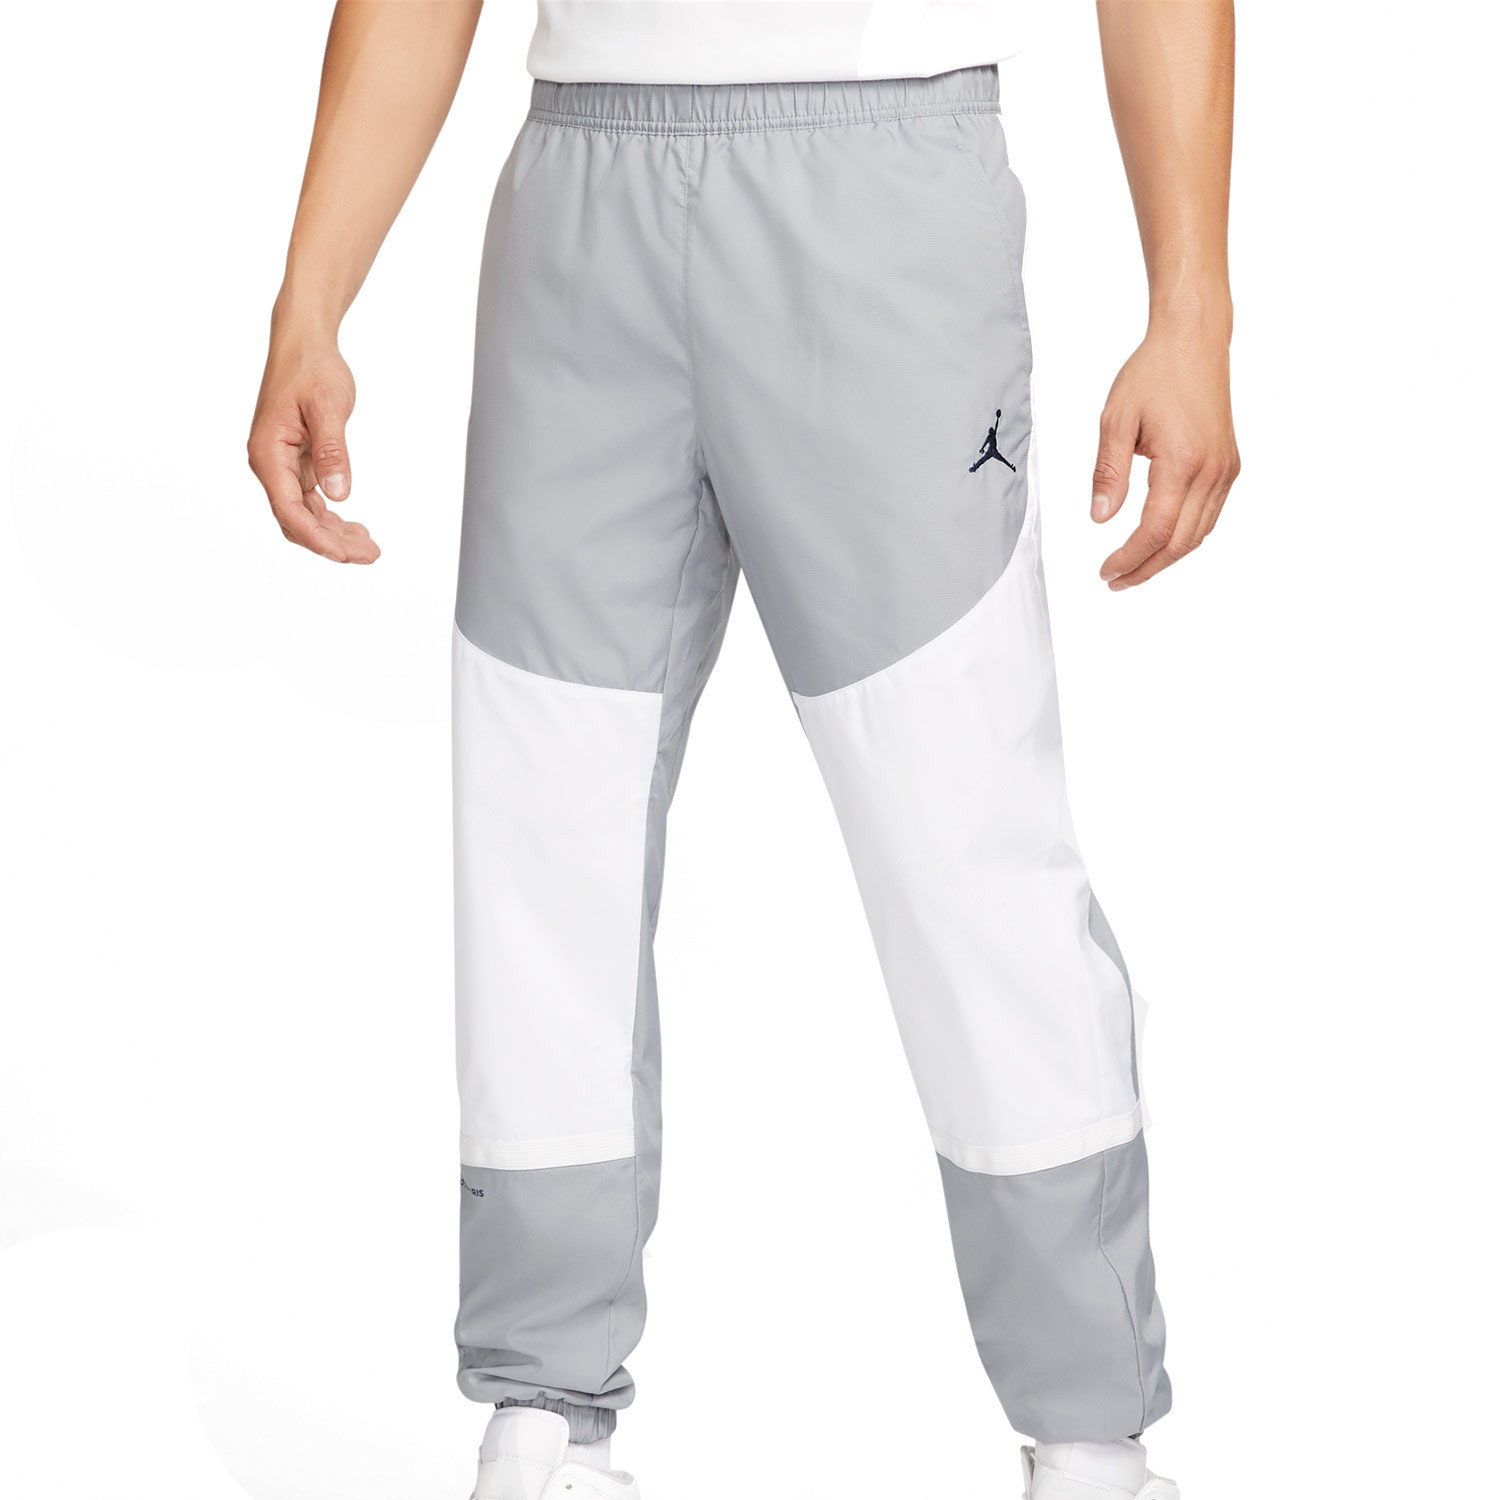 Pantalón Nike PSG x Jordan Flight Woven gris y blanco